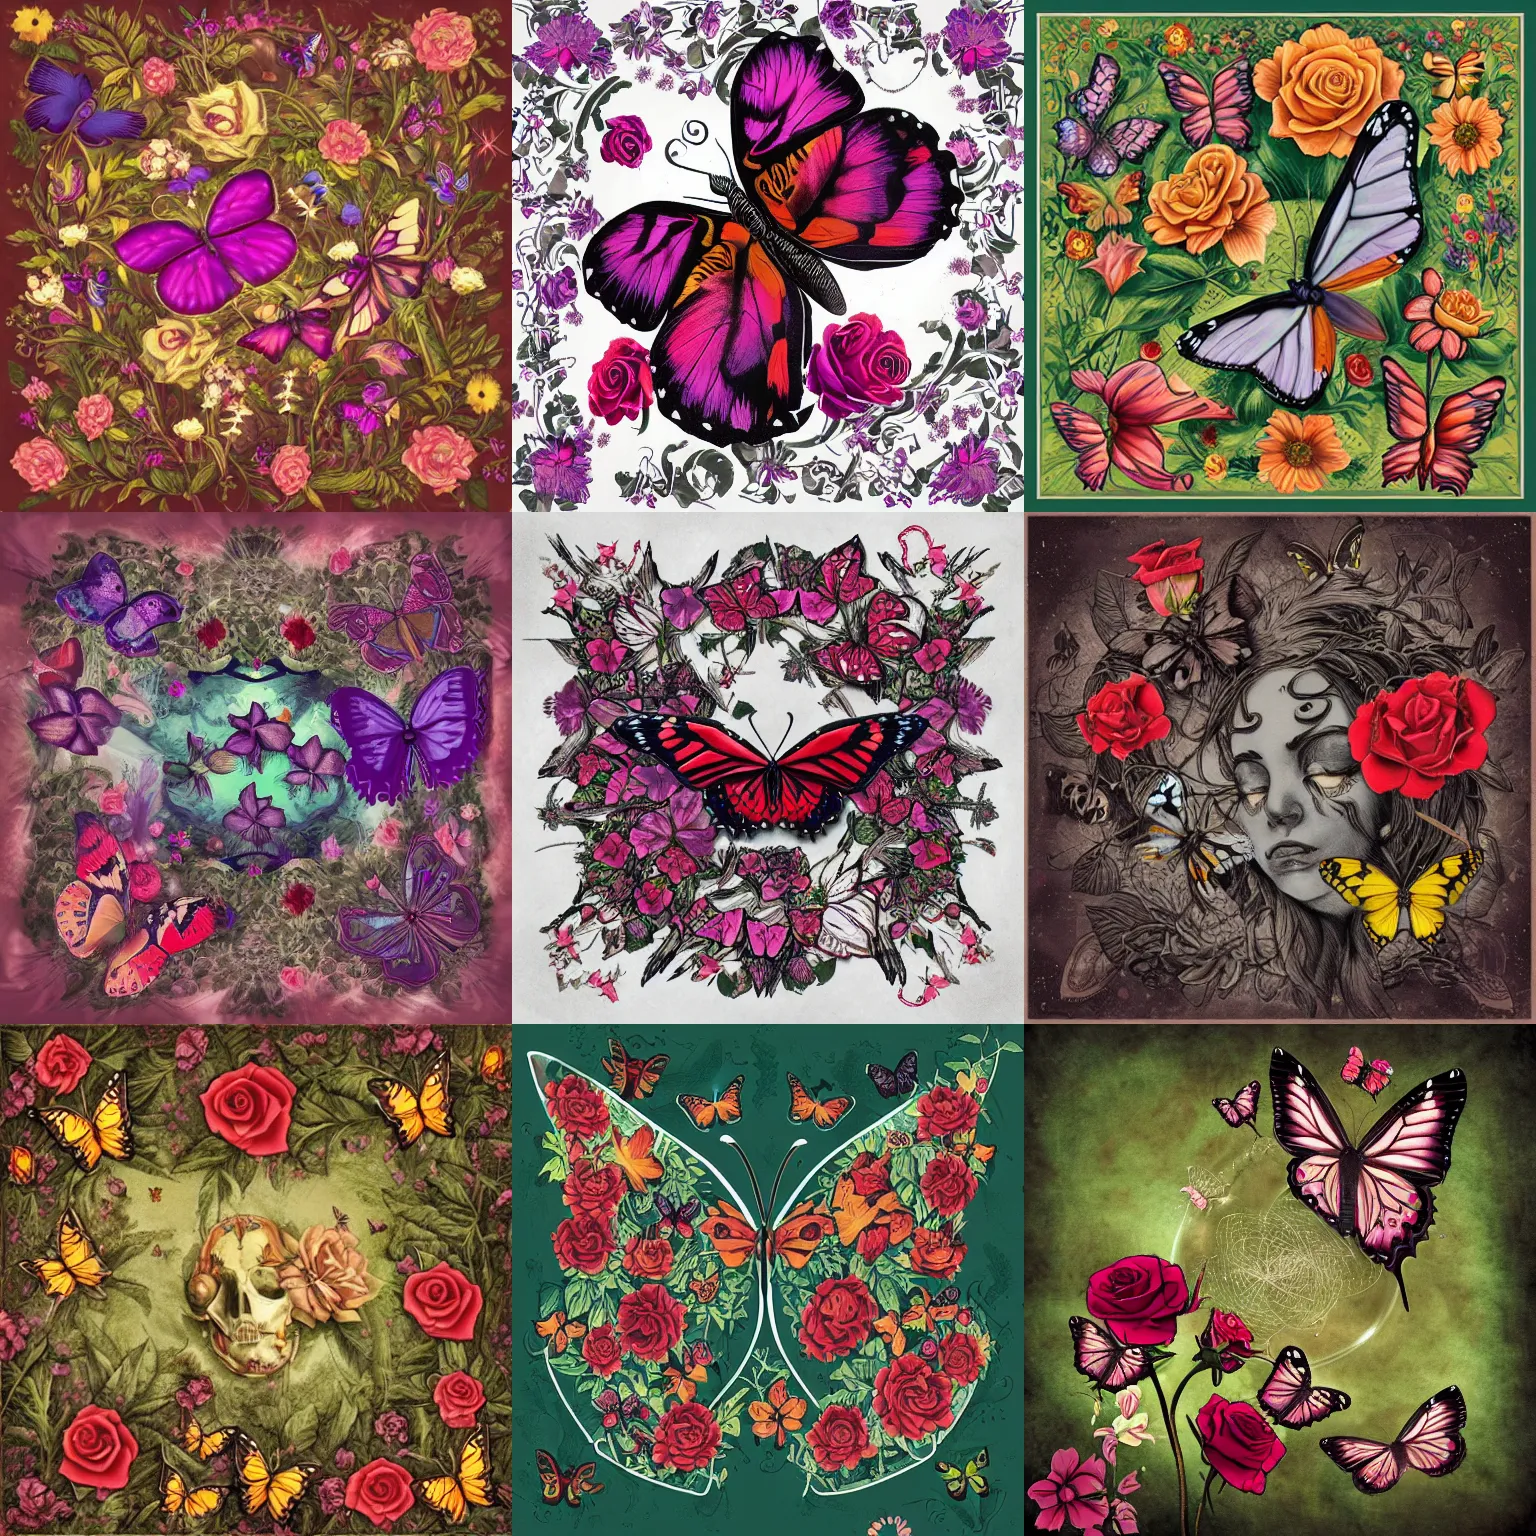 Prompt: Butterflies and roses, album cover, doom metal, no logo